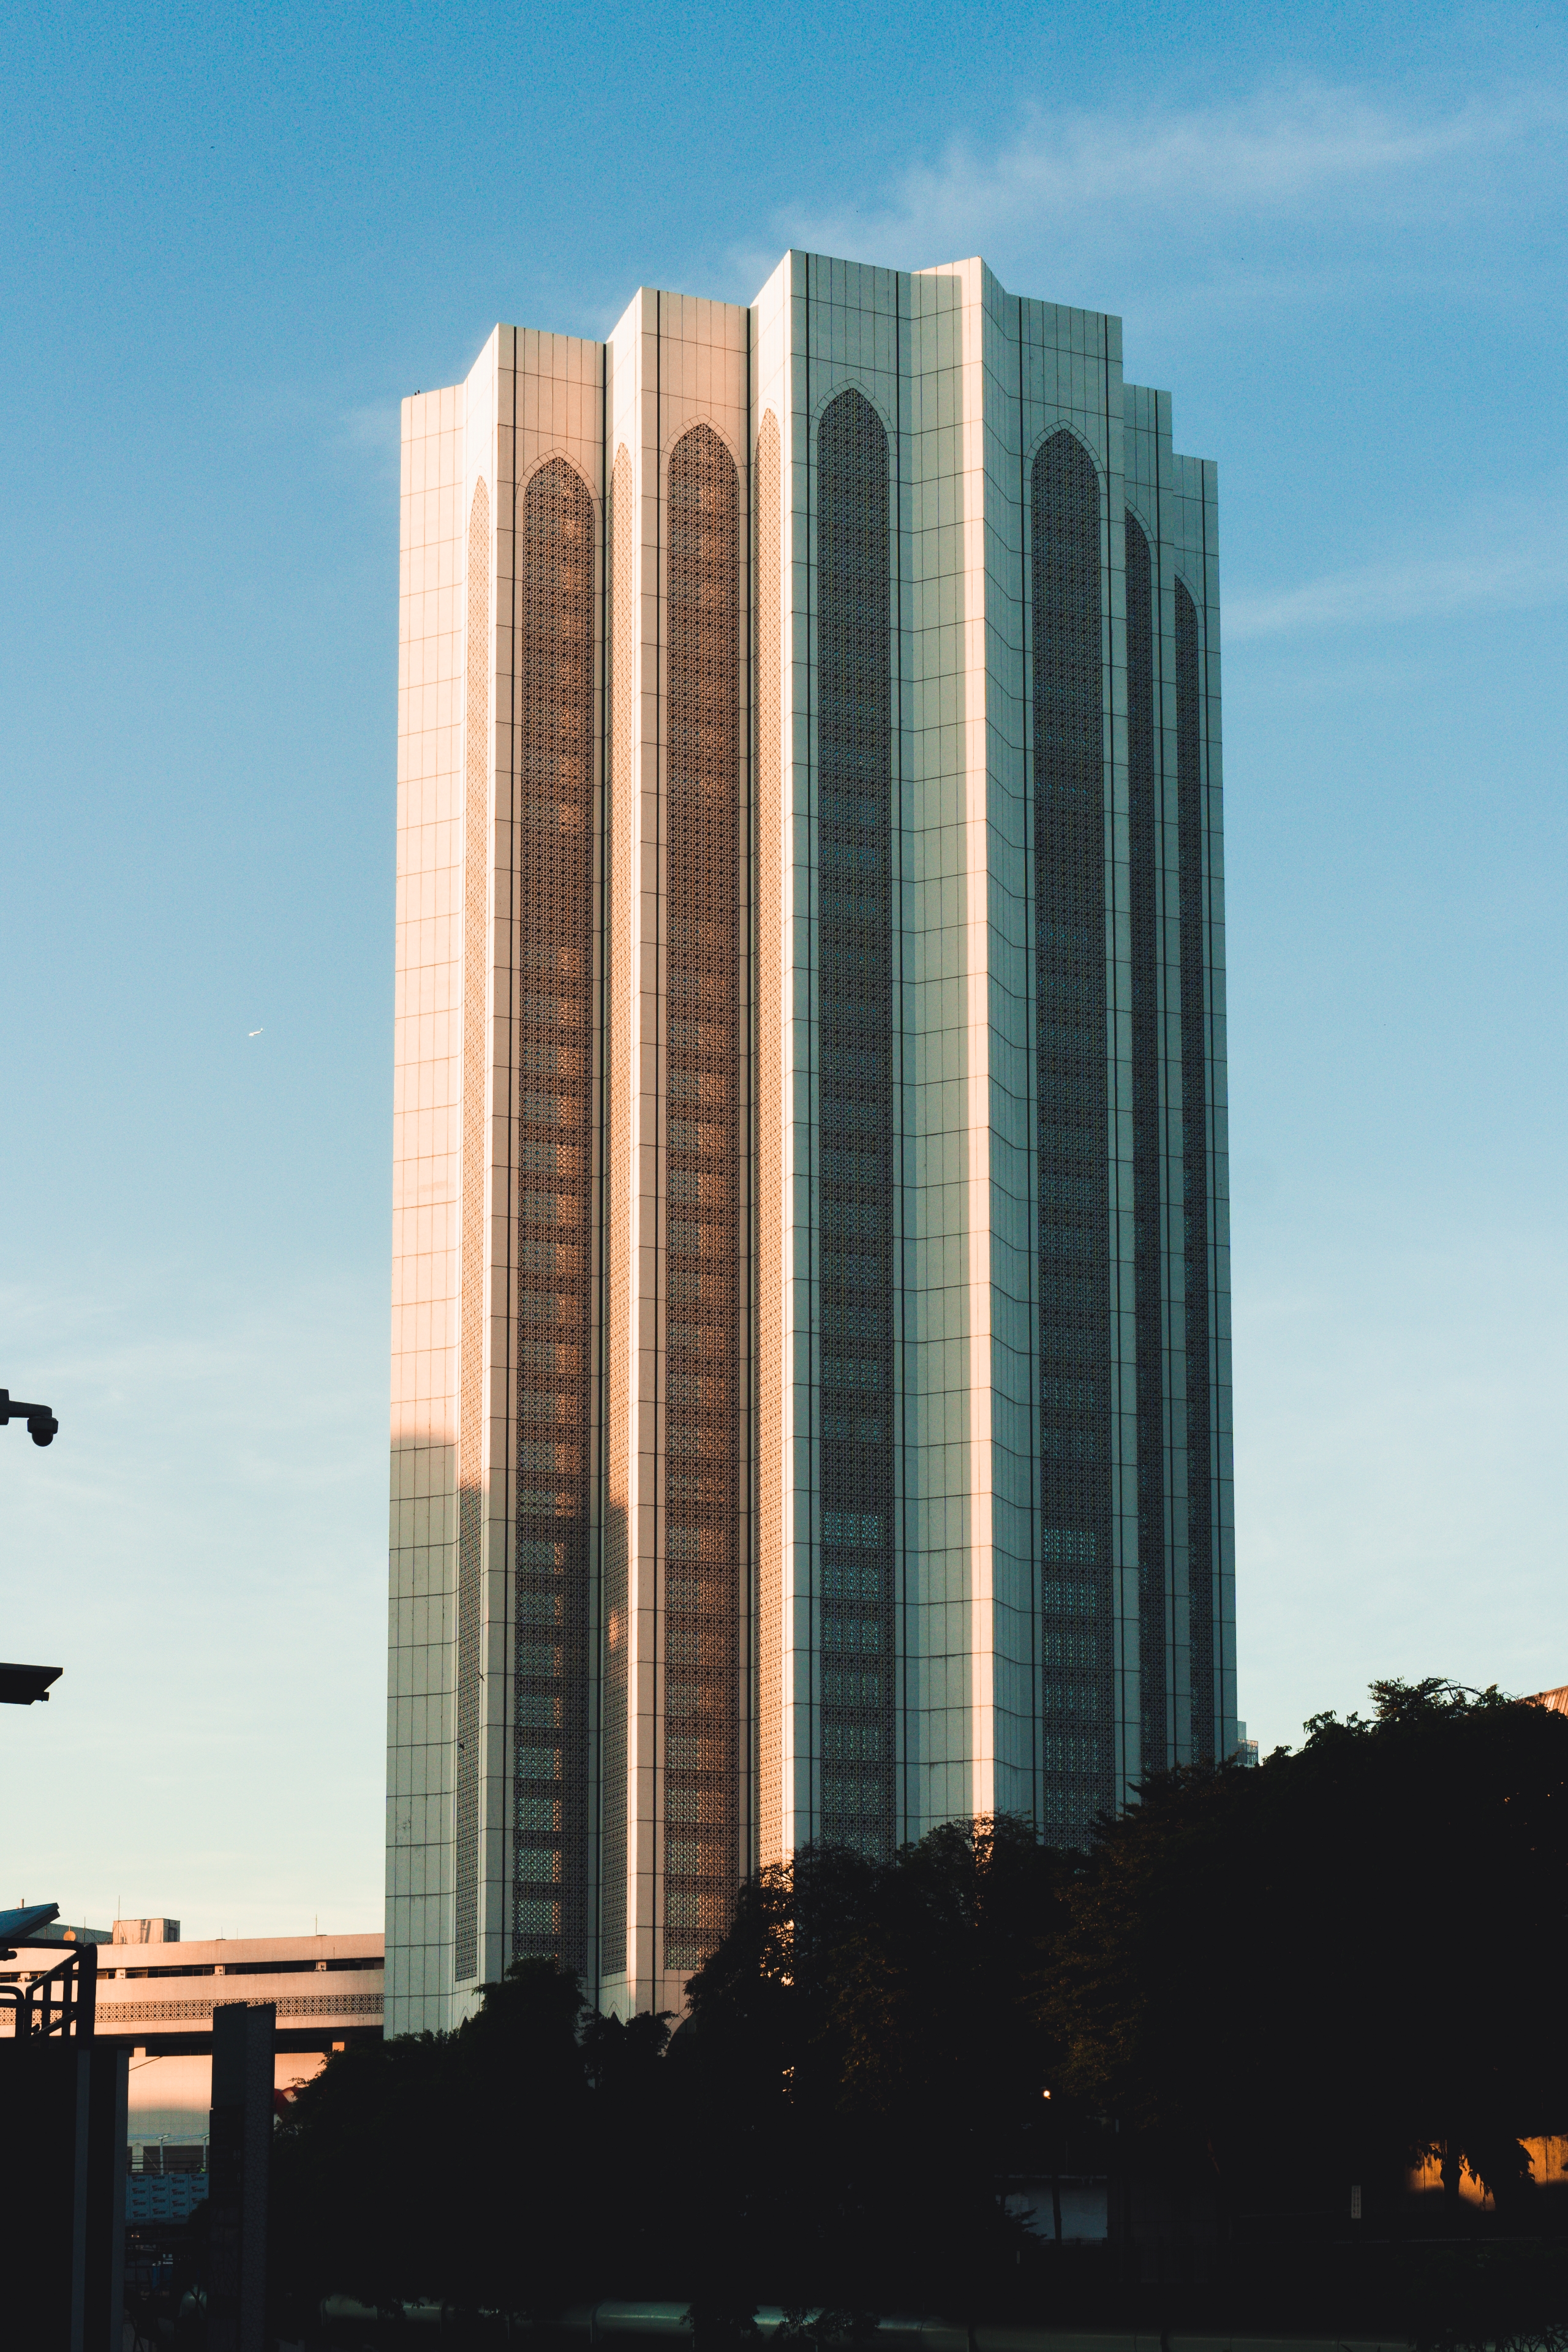 General 2560x3840 Kuala Lumpur Malaysia city architecture skyline building portrait display